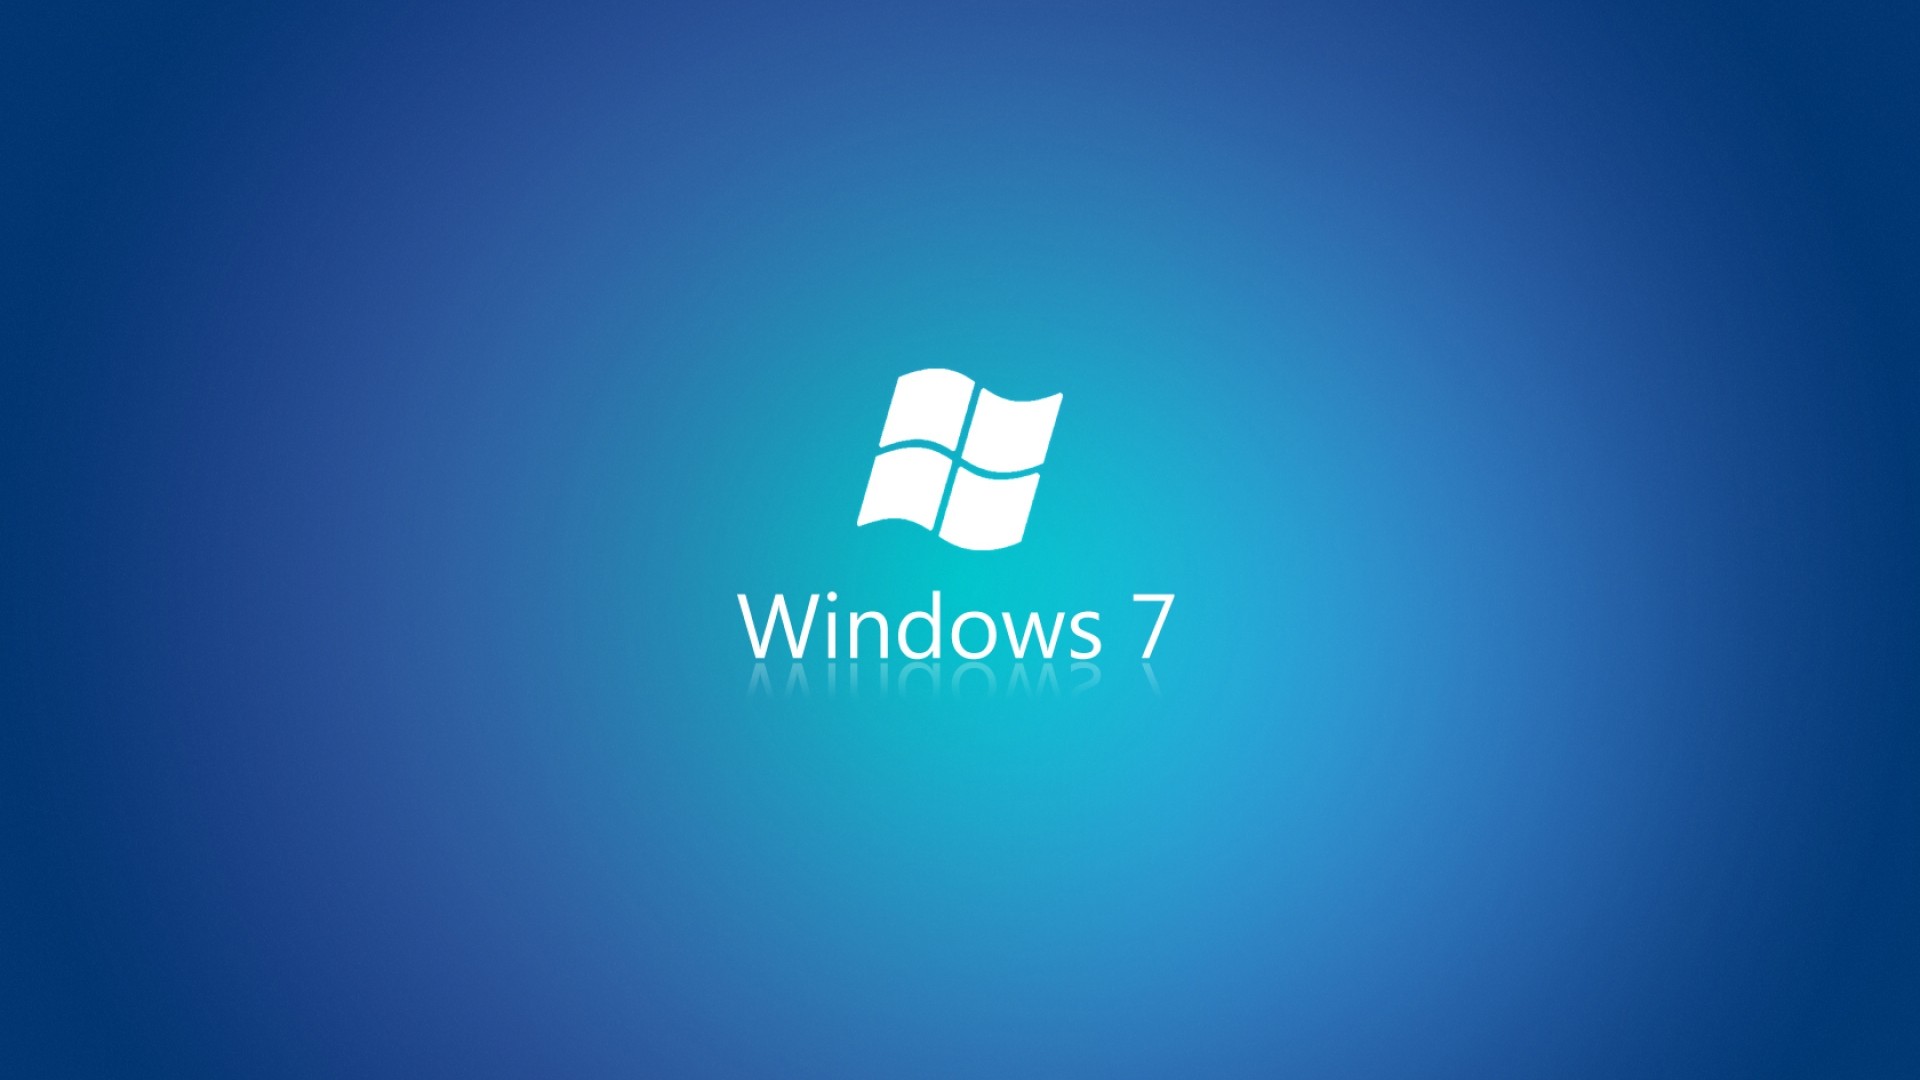 1920x1080 Windows 7 logo wallpaper